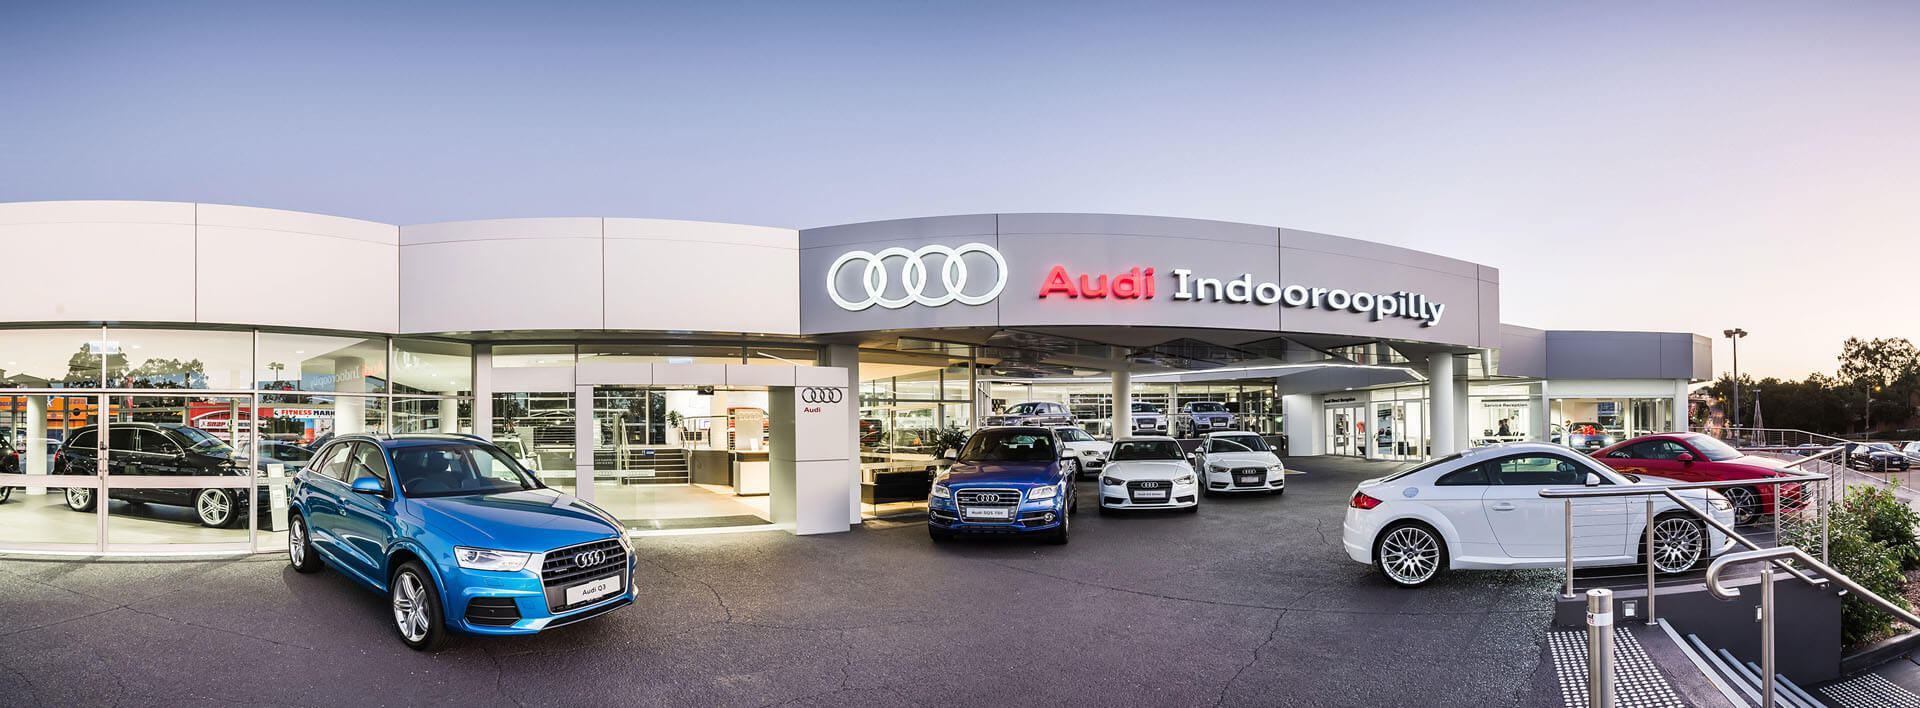 Audi Indooroopilly